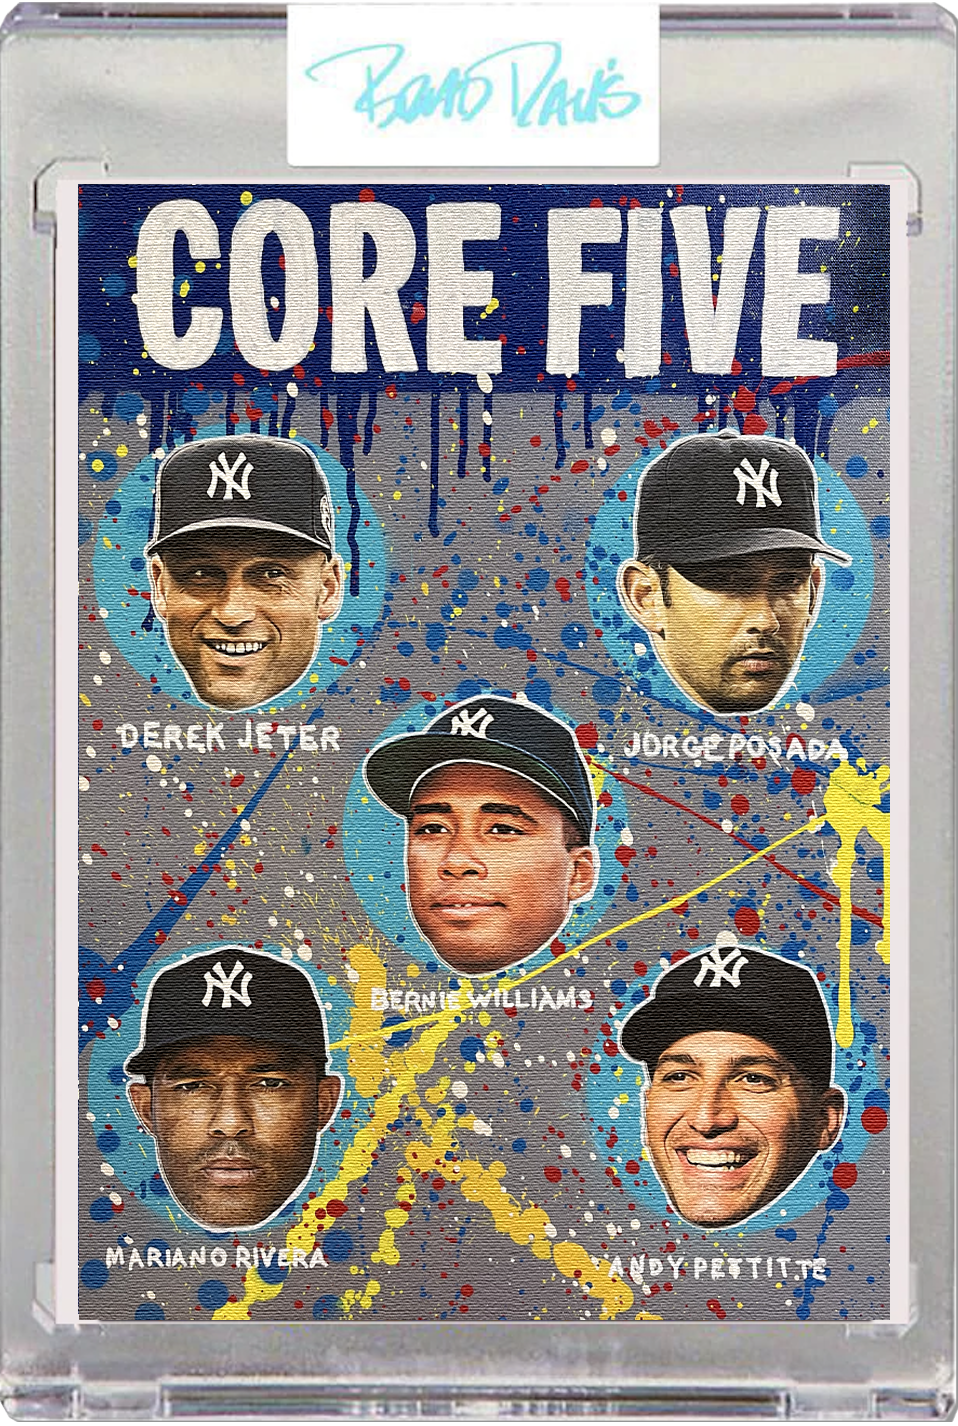 Core Five